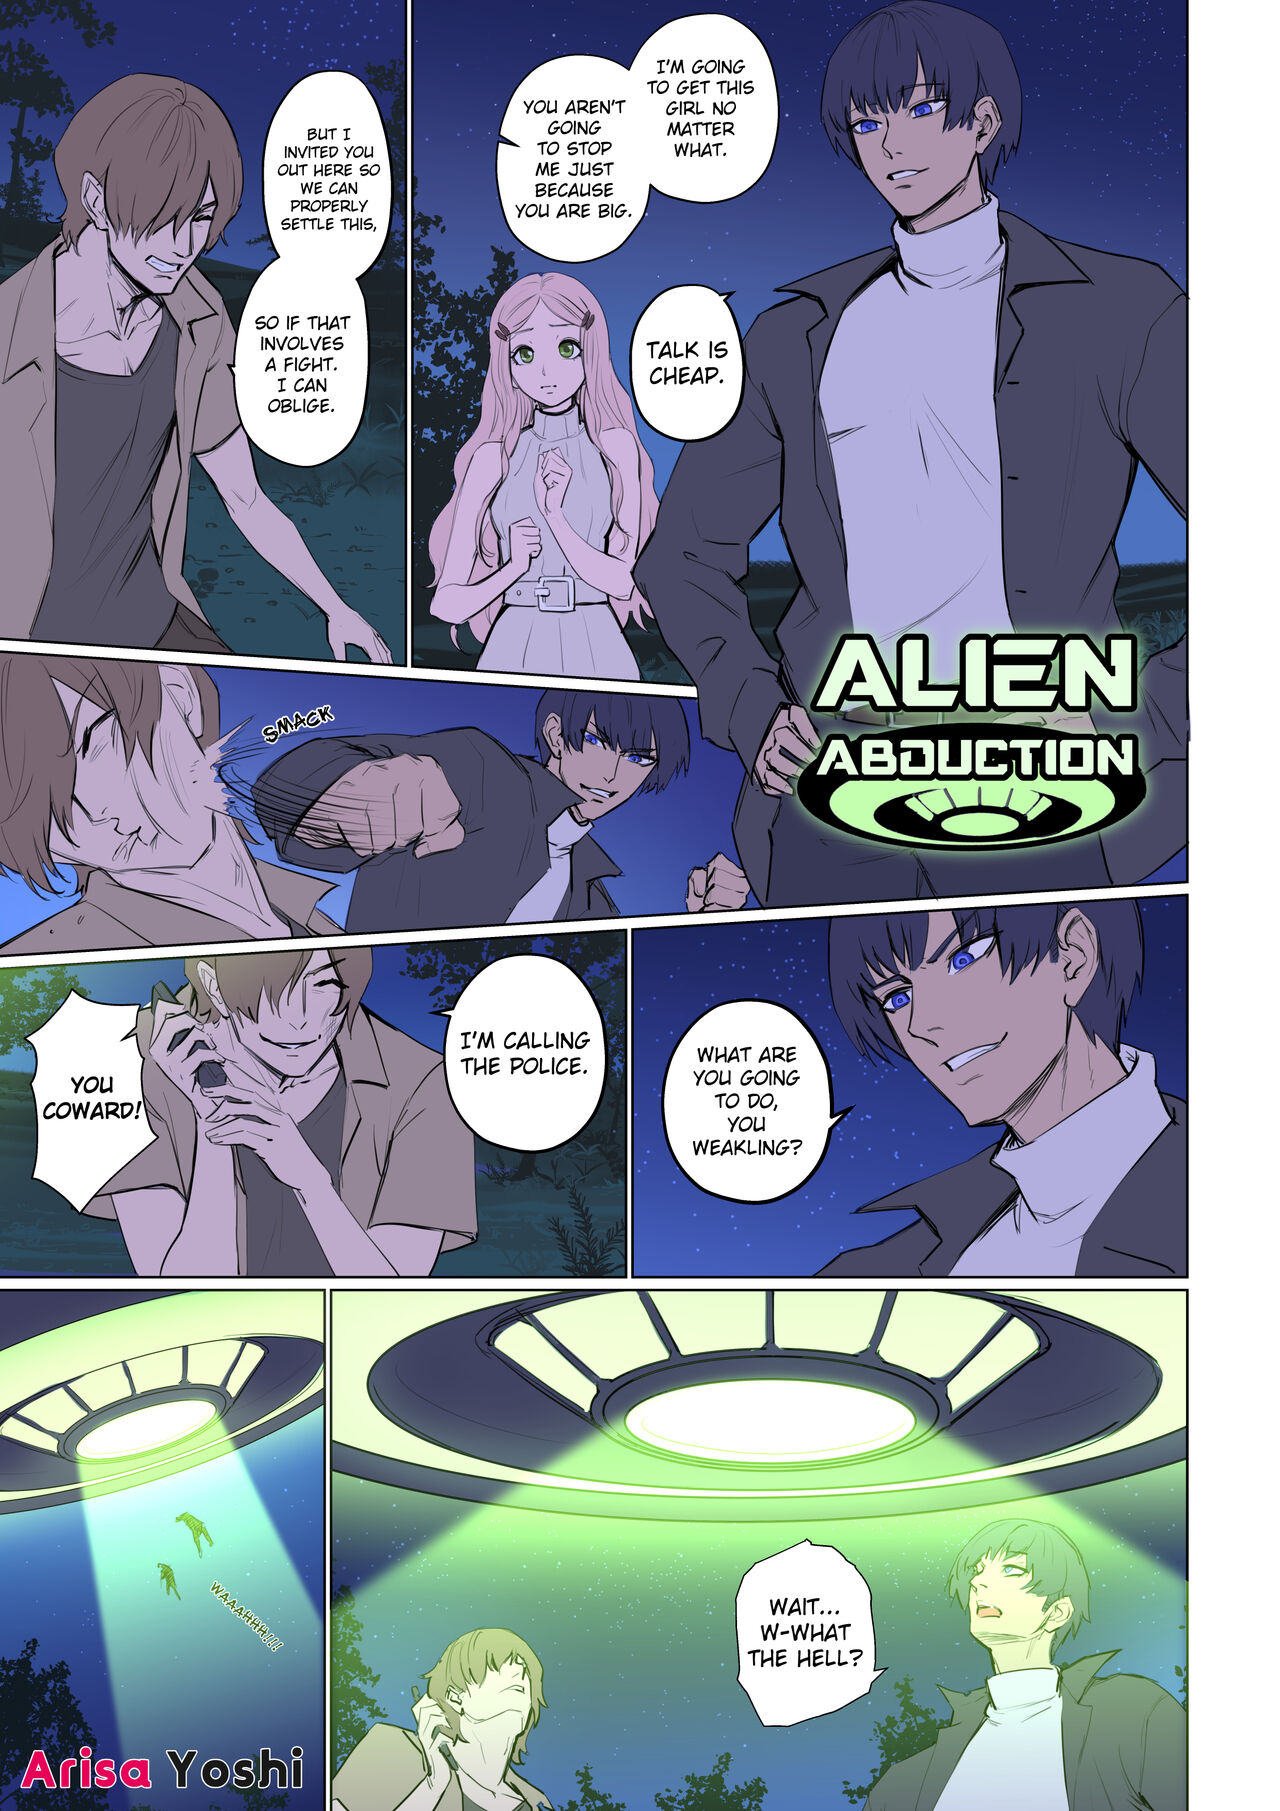 Female Alien Sex Cartoon - Alien Abduction 1 [Arisane / Arisa Yoshi] - Porn Cartoon Comics